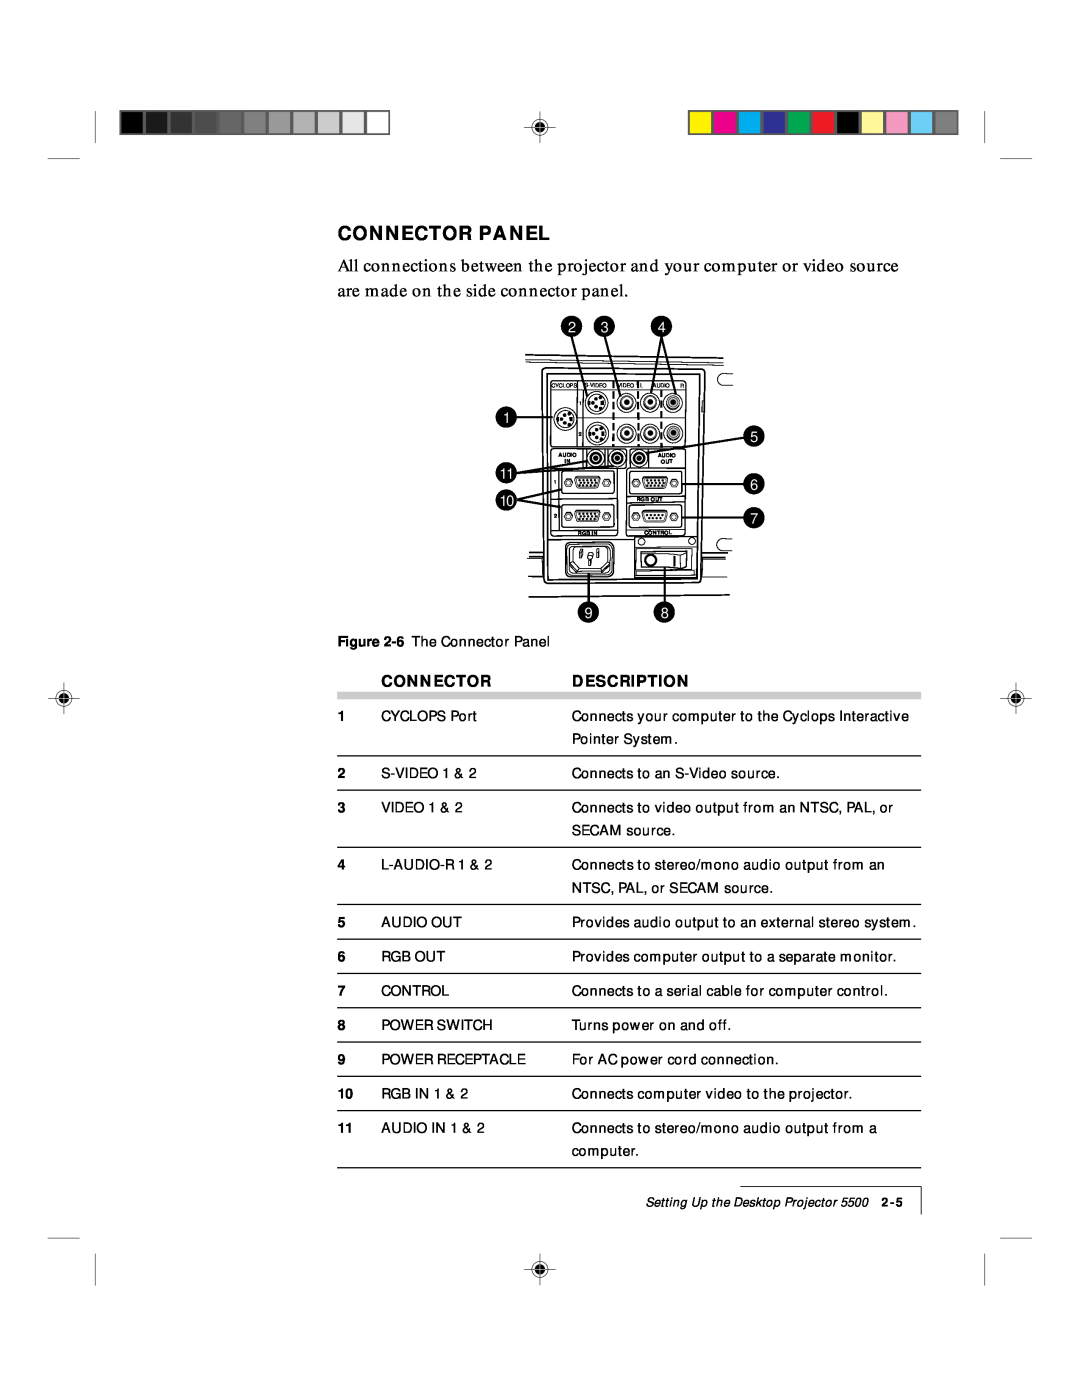 Proxima ASA DP5500 manual Connector Panel, Description, Cyclo Ps 